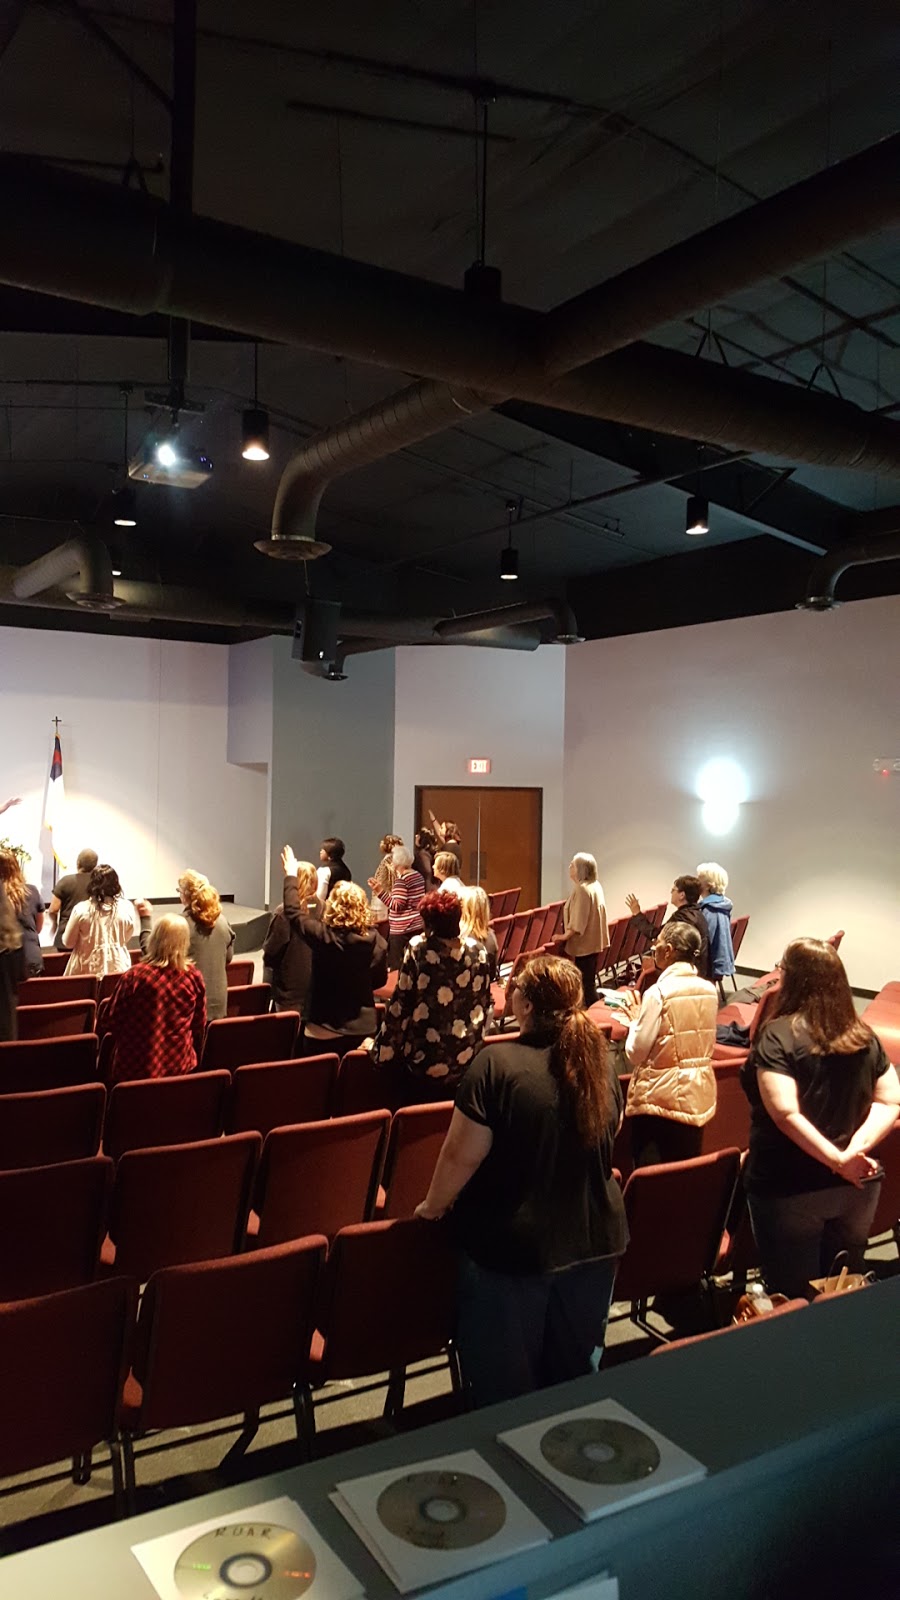 Faith Family Church | 1205 Sunset Dr, El Reno, OK 73036, USA | Phone: (405) 262-5509